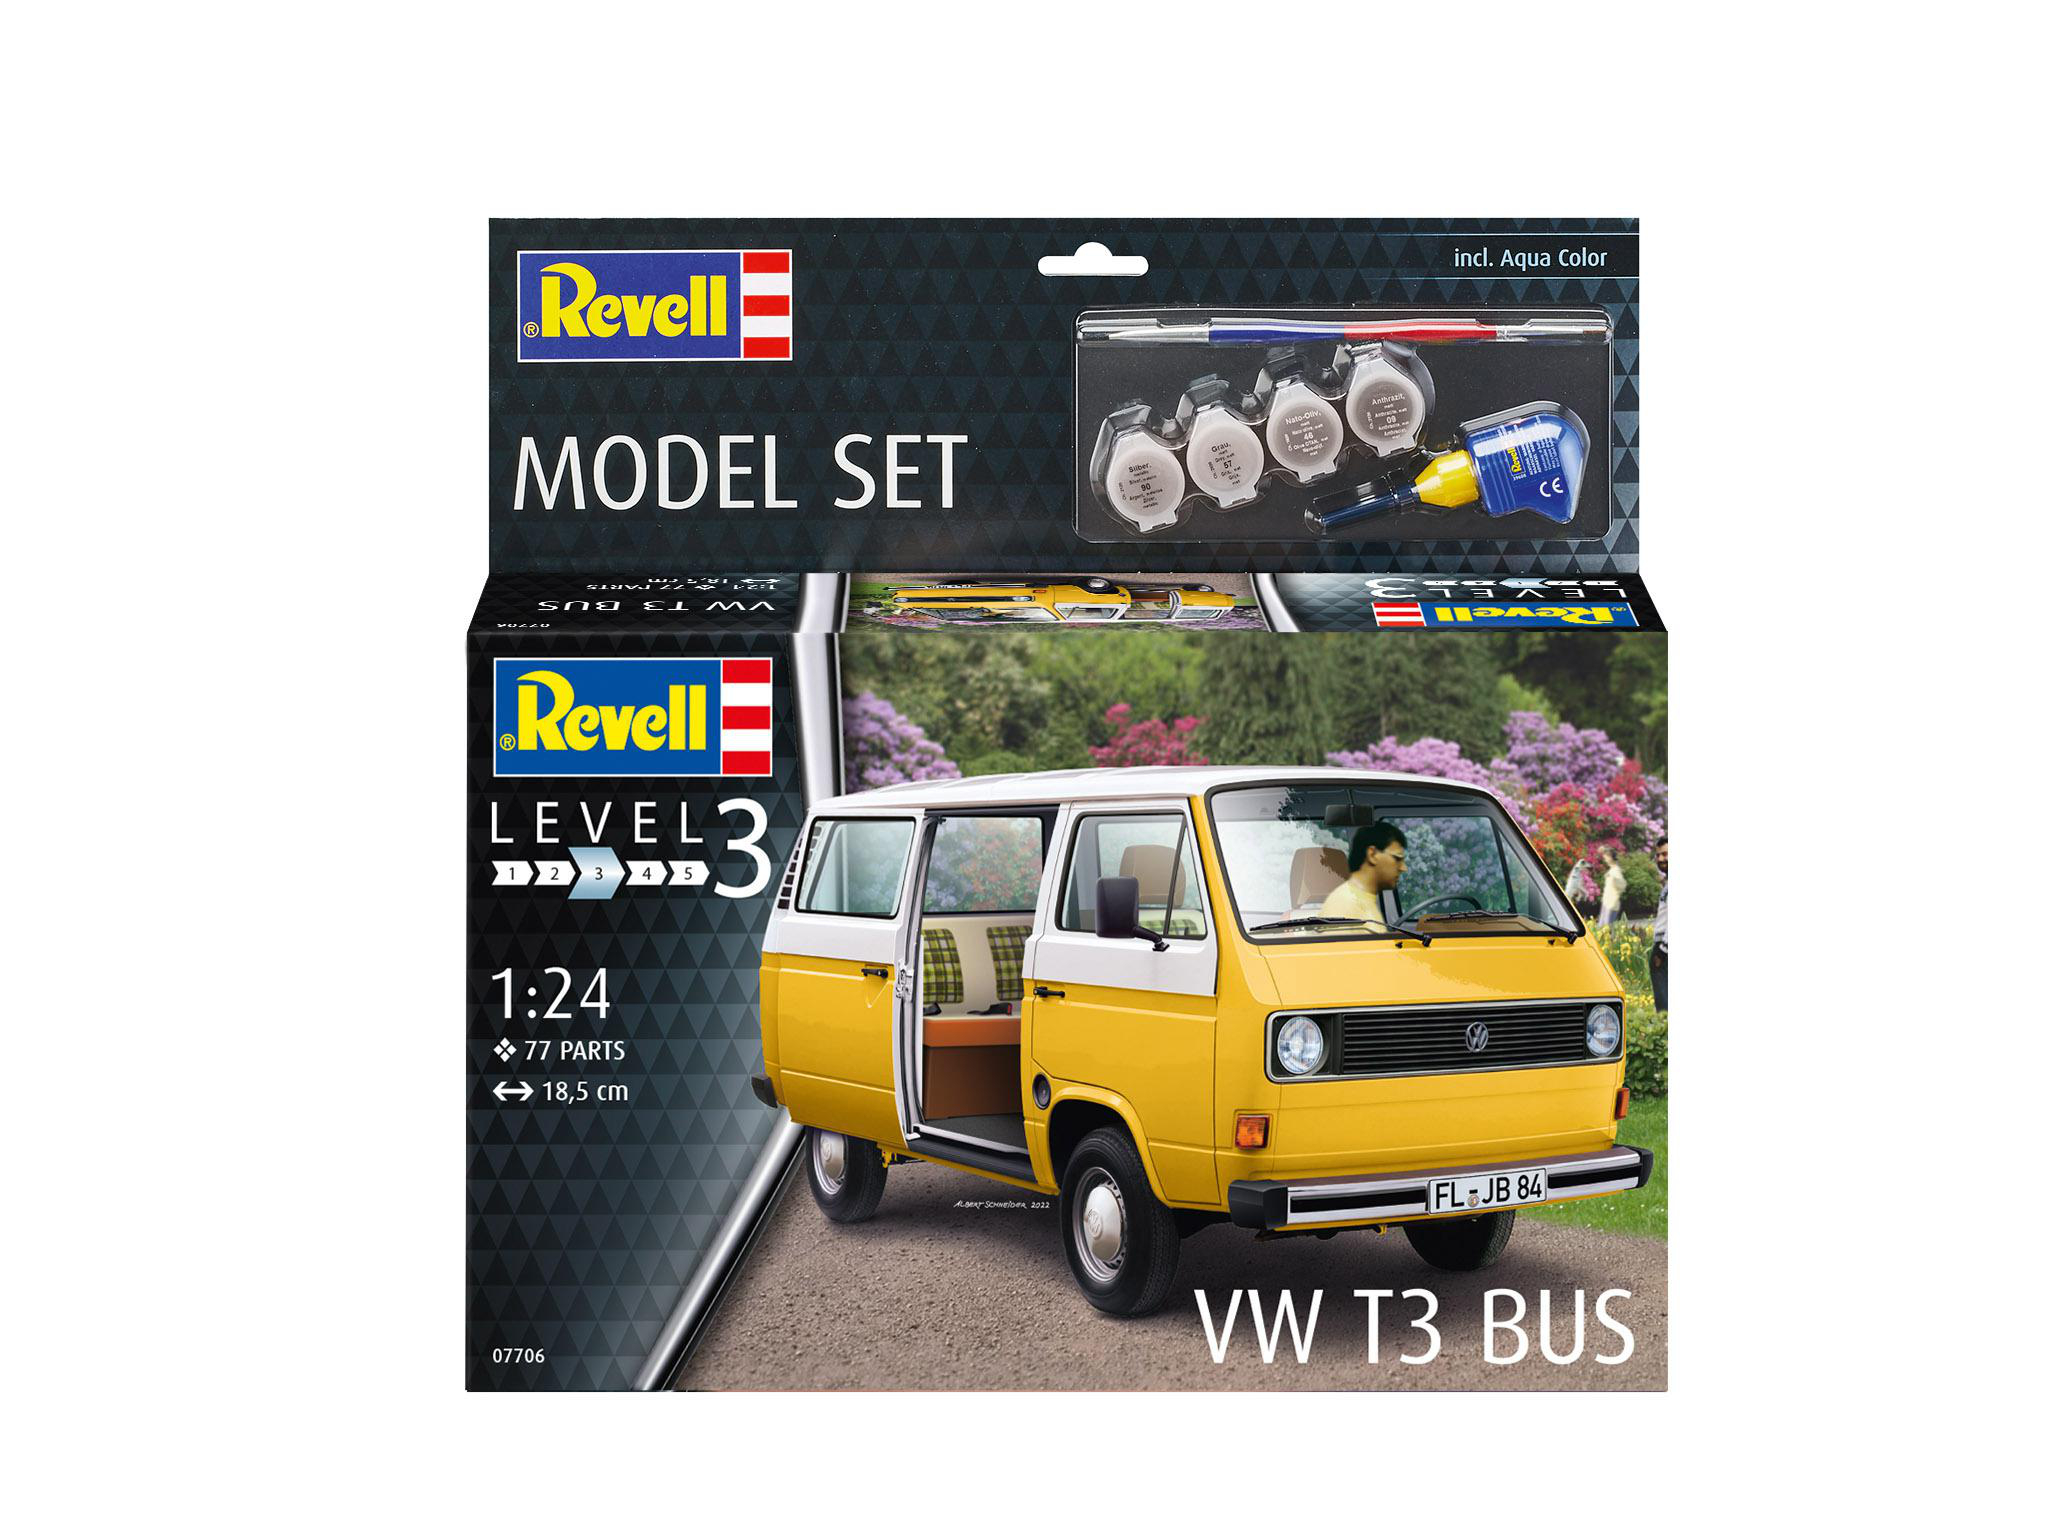 T3 Bus Gelb/Weiß Set 67706 Modellbausatz, REVELL Model VW